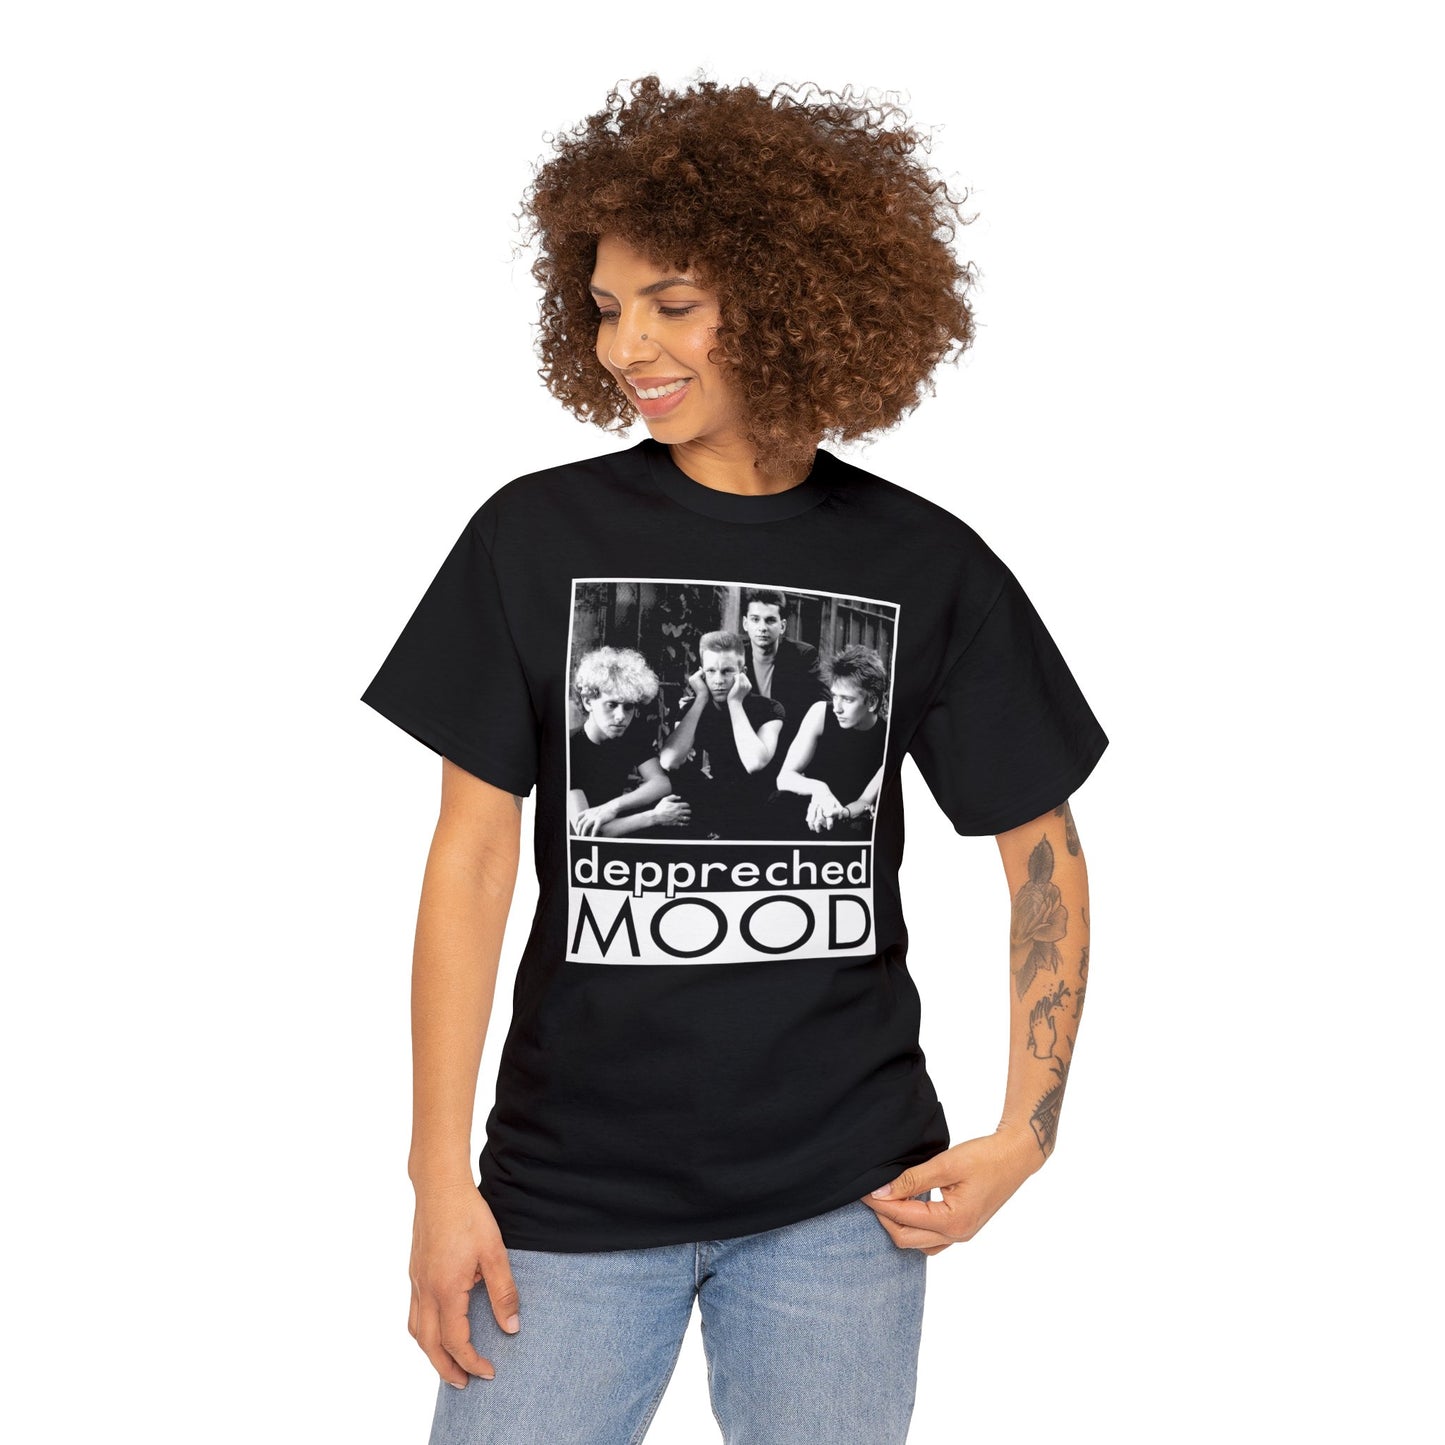 Deppreched Mood t-shirt